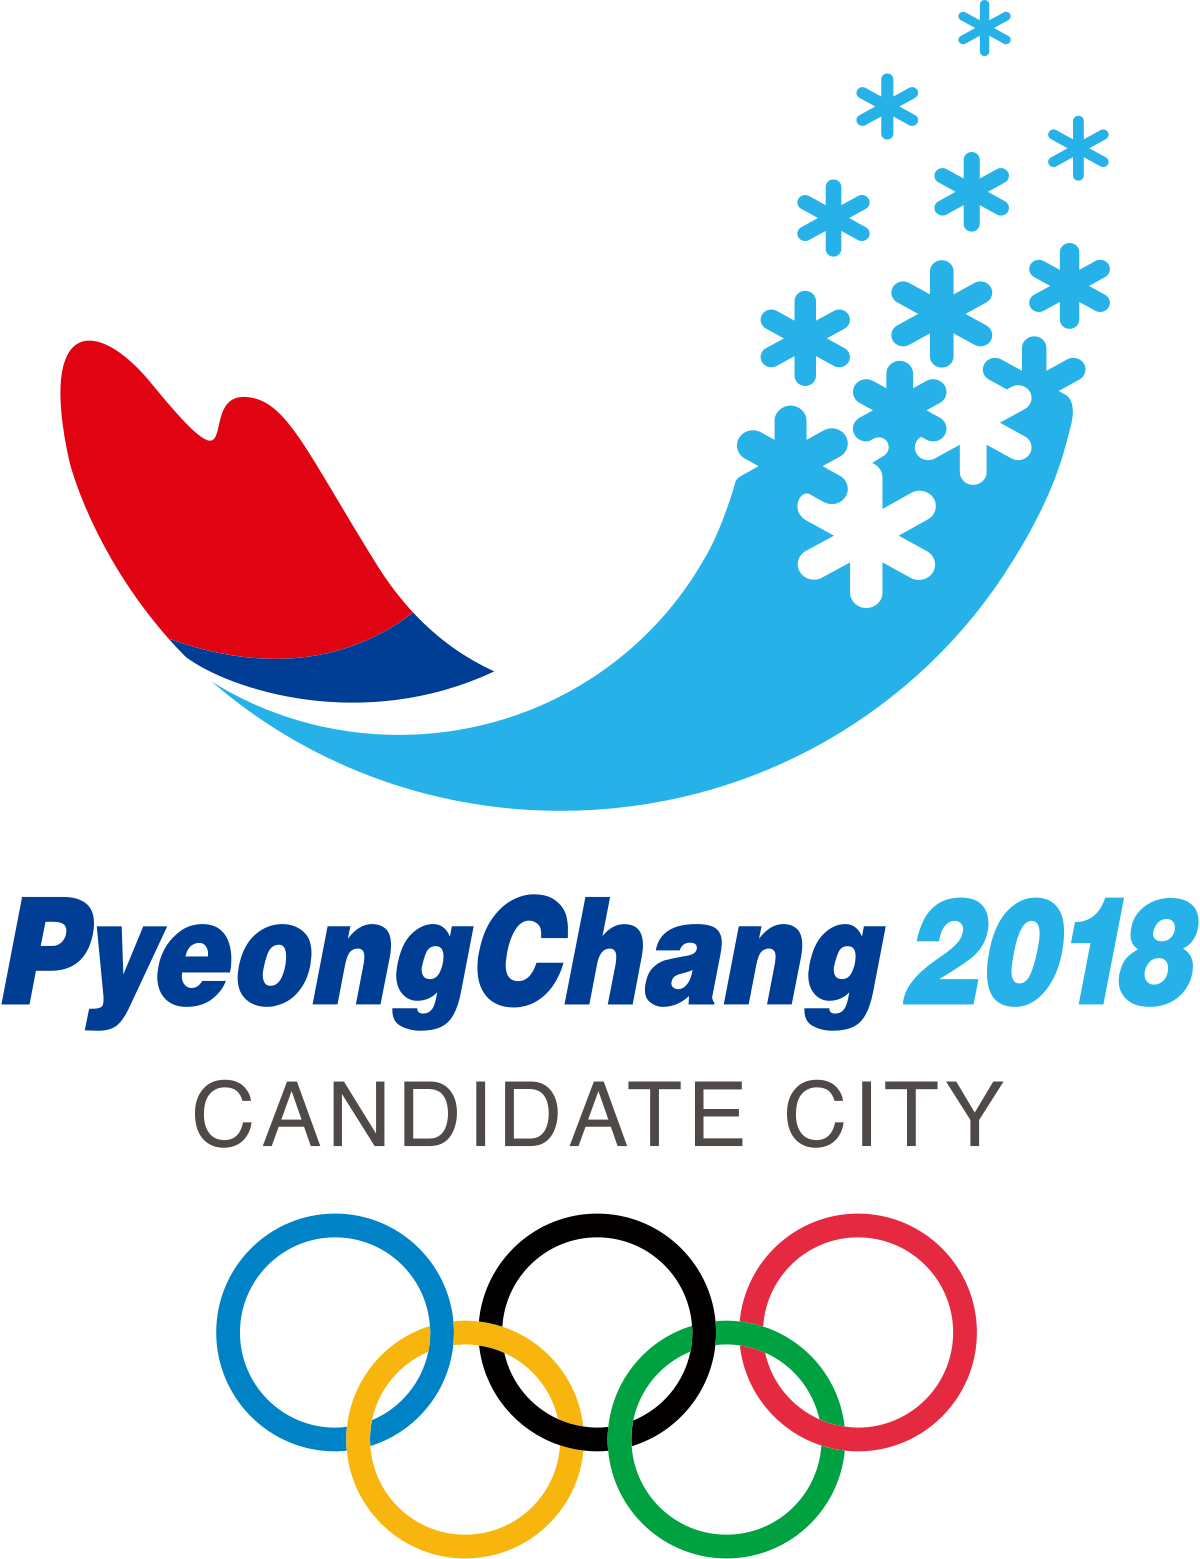 Pyeongchang bid for the 2018 Winter Olympics Wikipedia